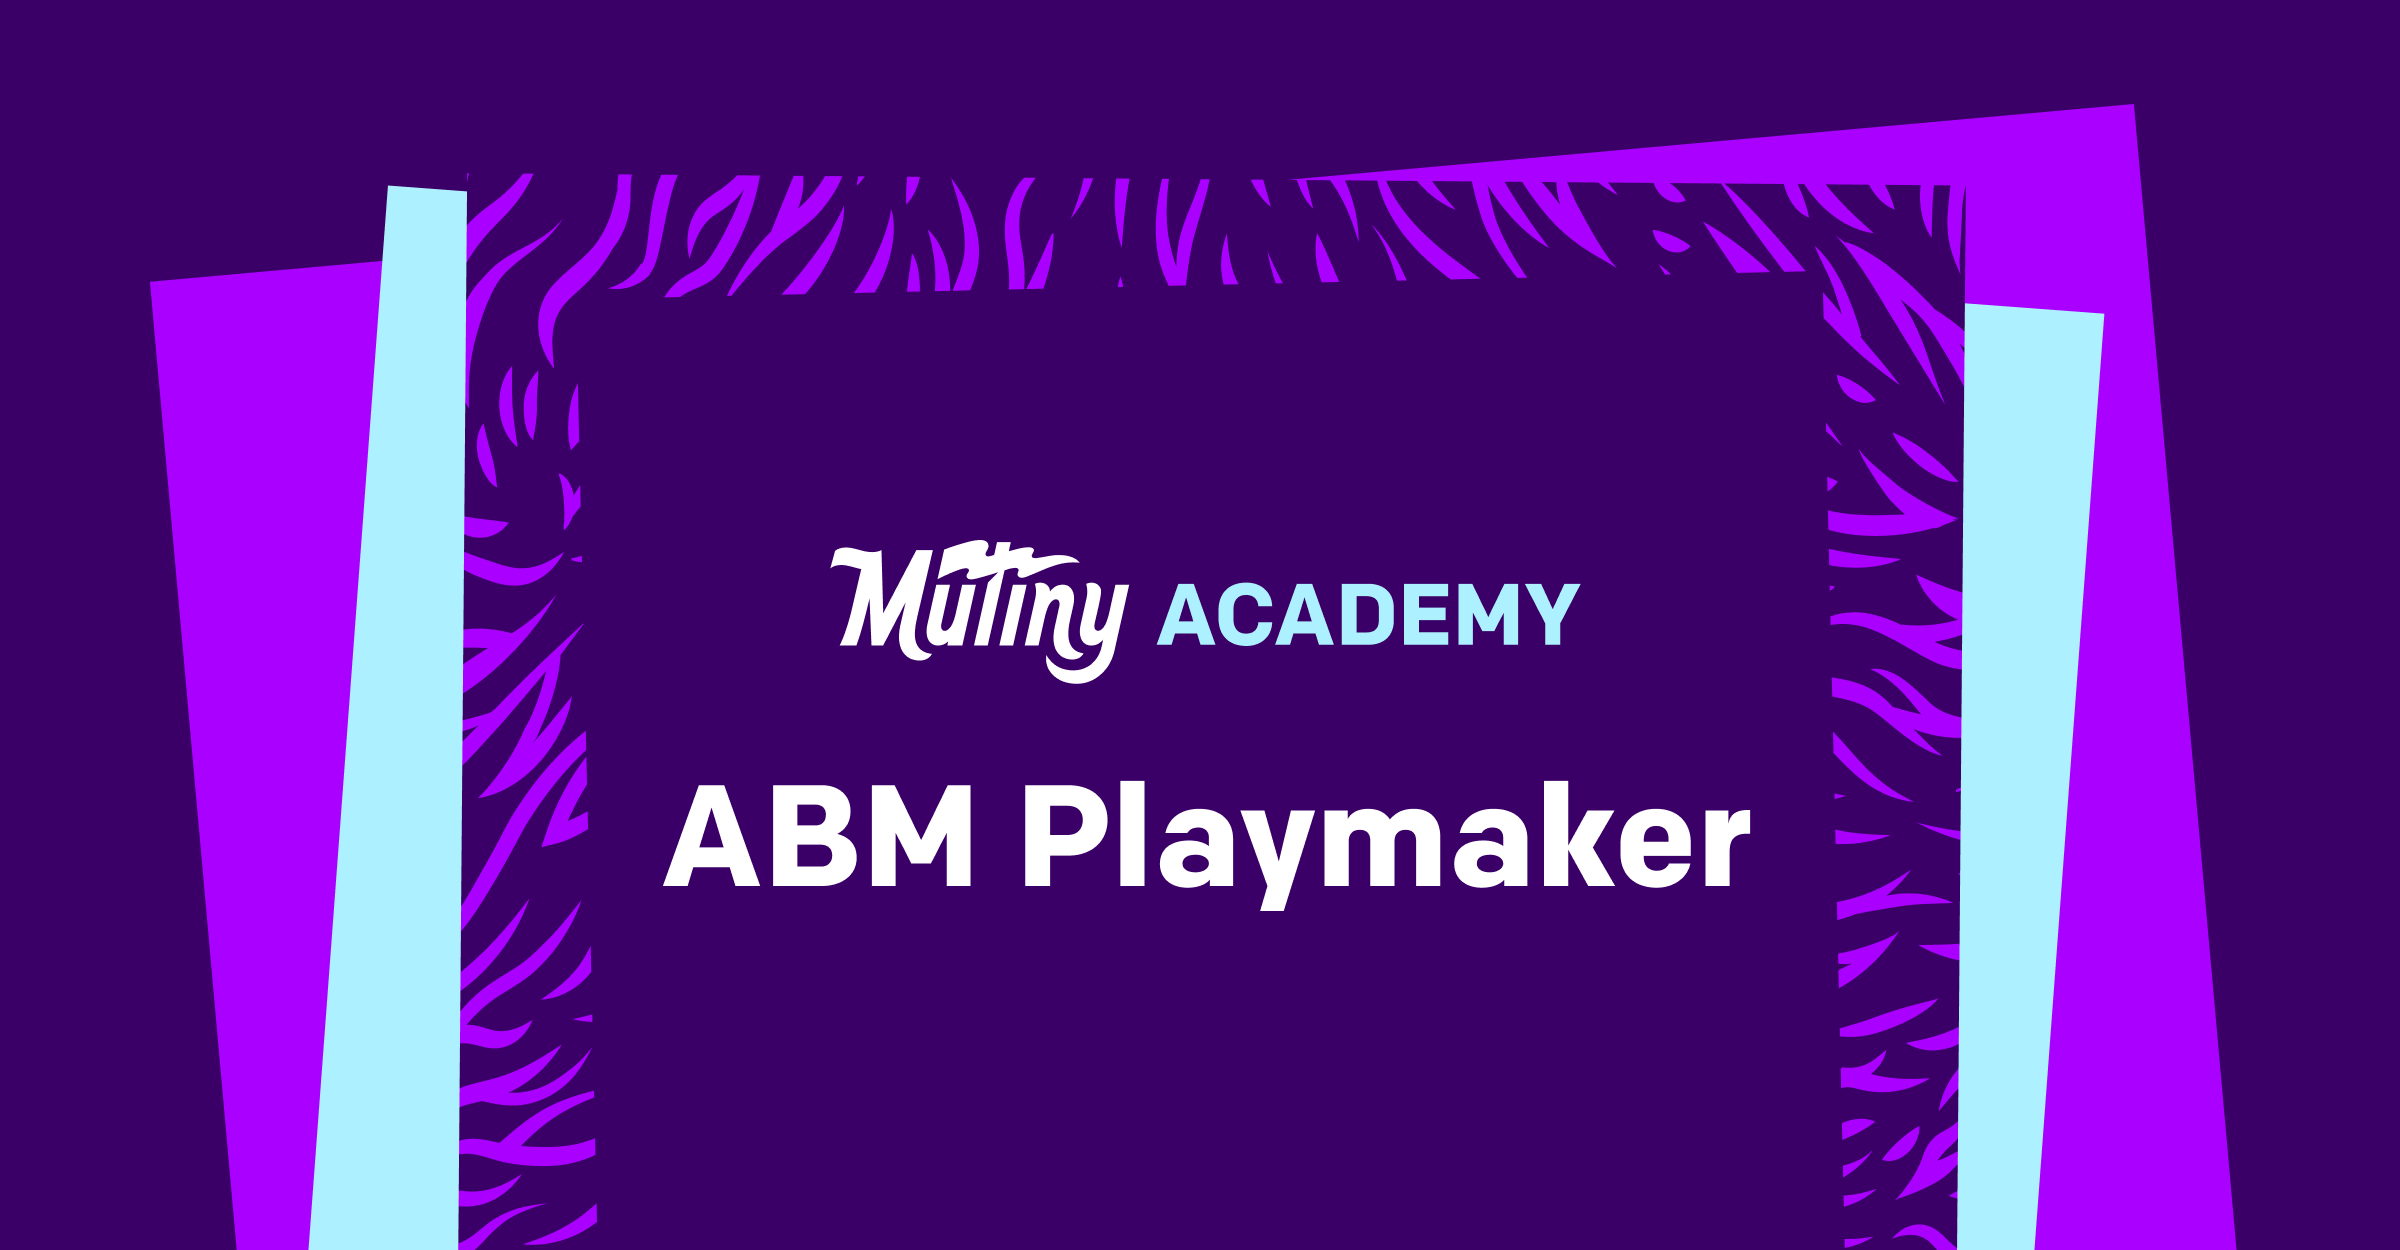 ABM Playmaker